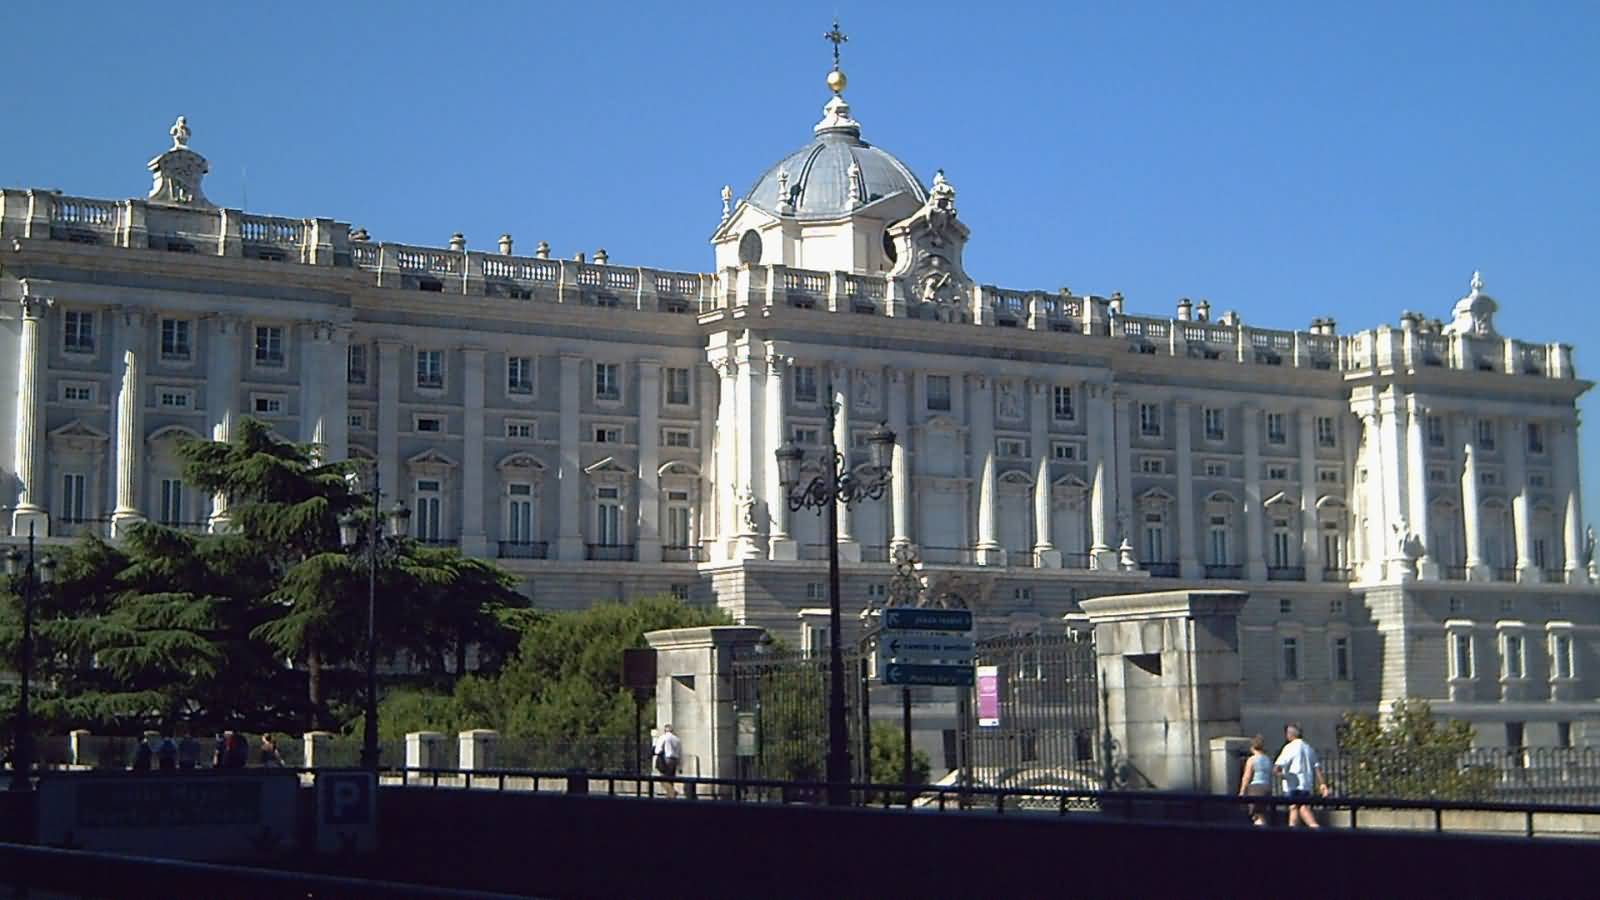 Royal Palace Of Madrid Exterior View